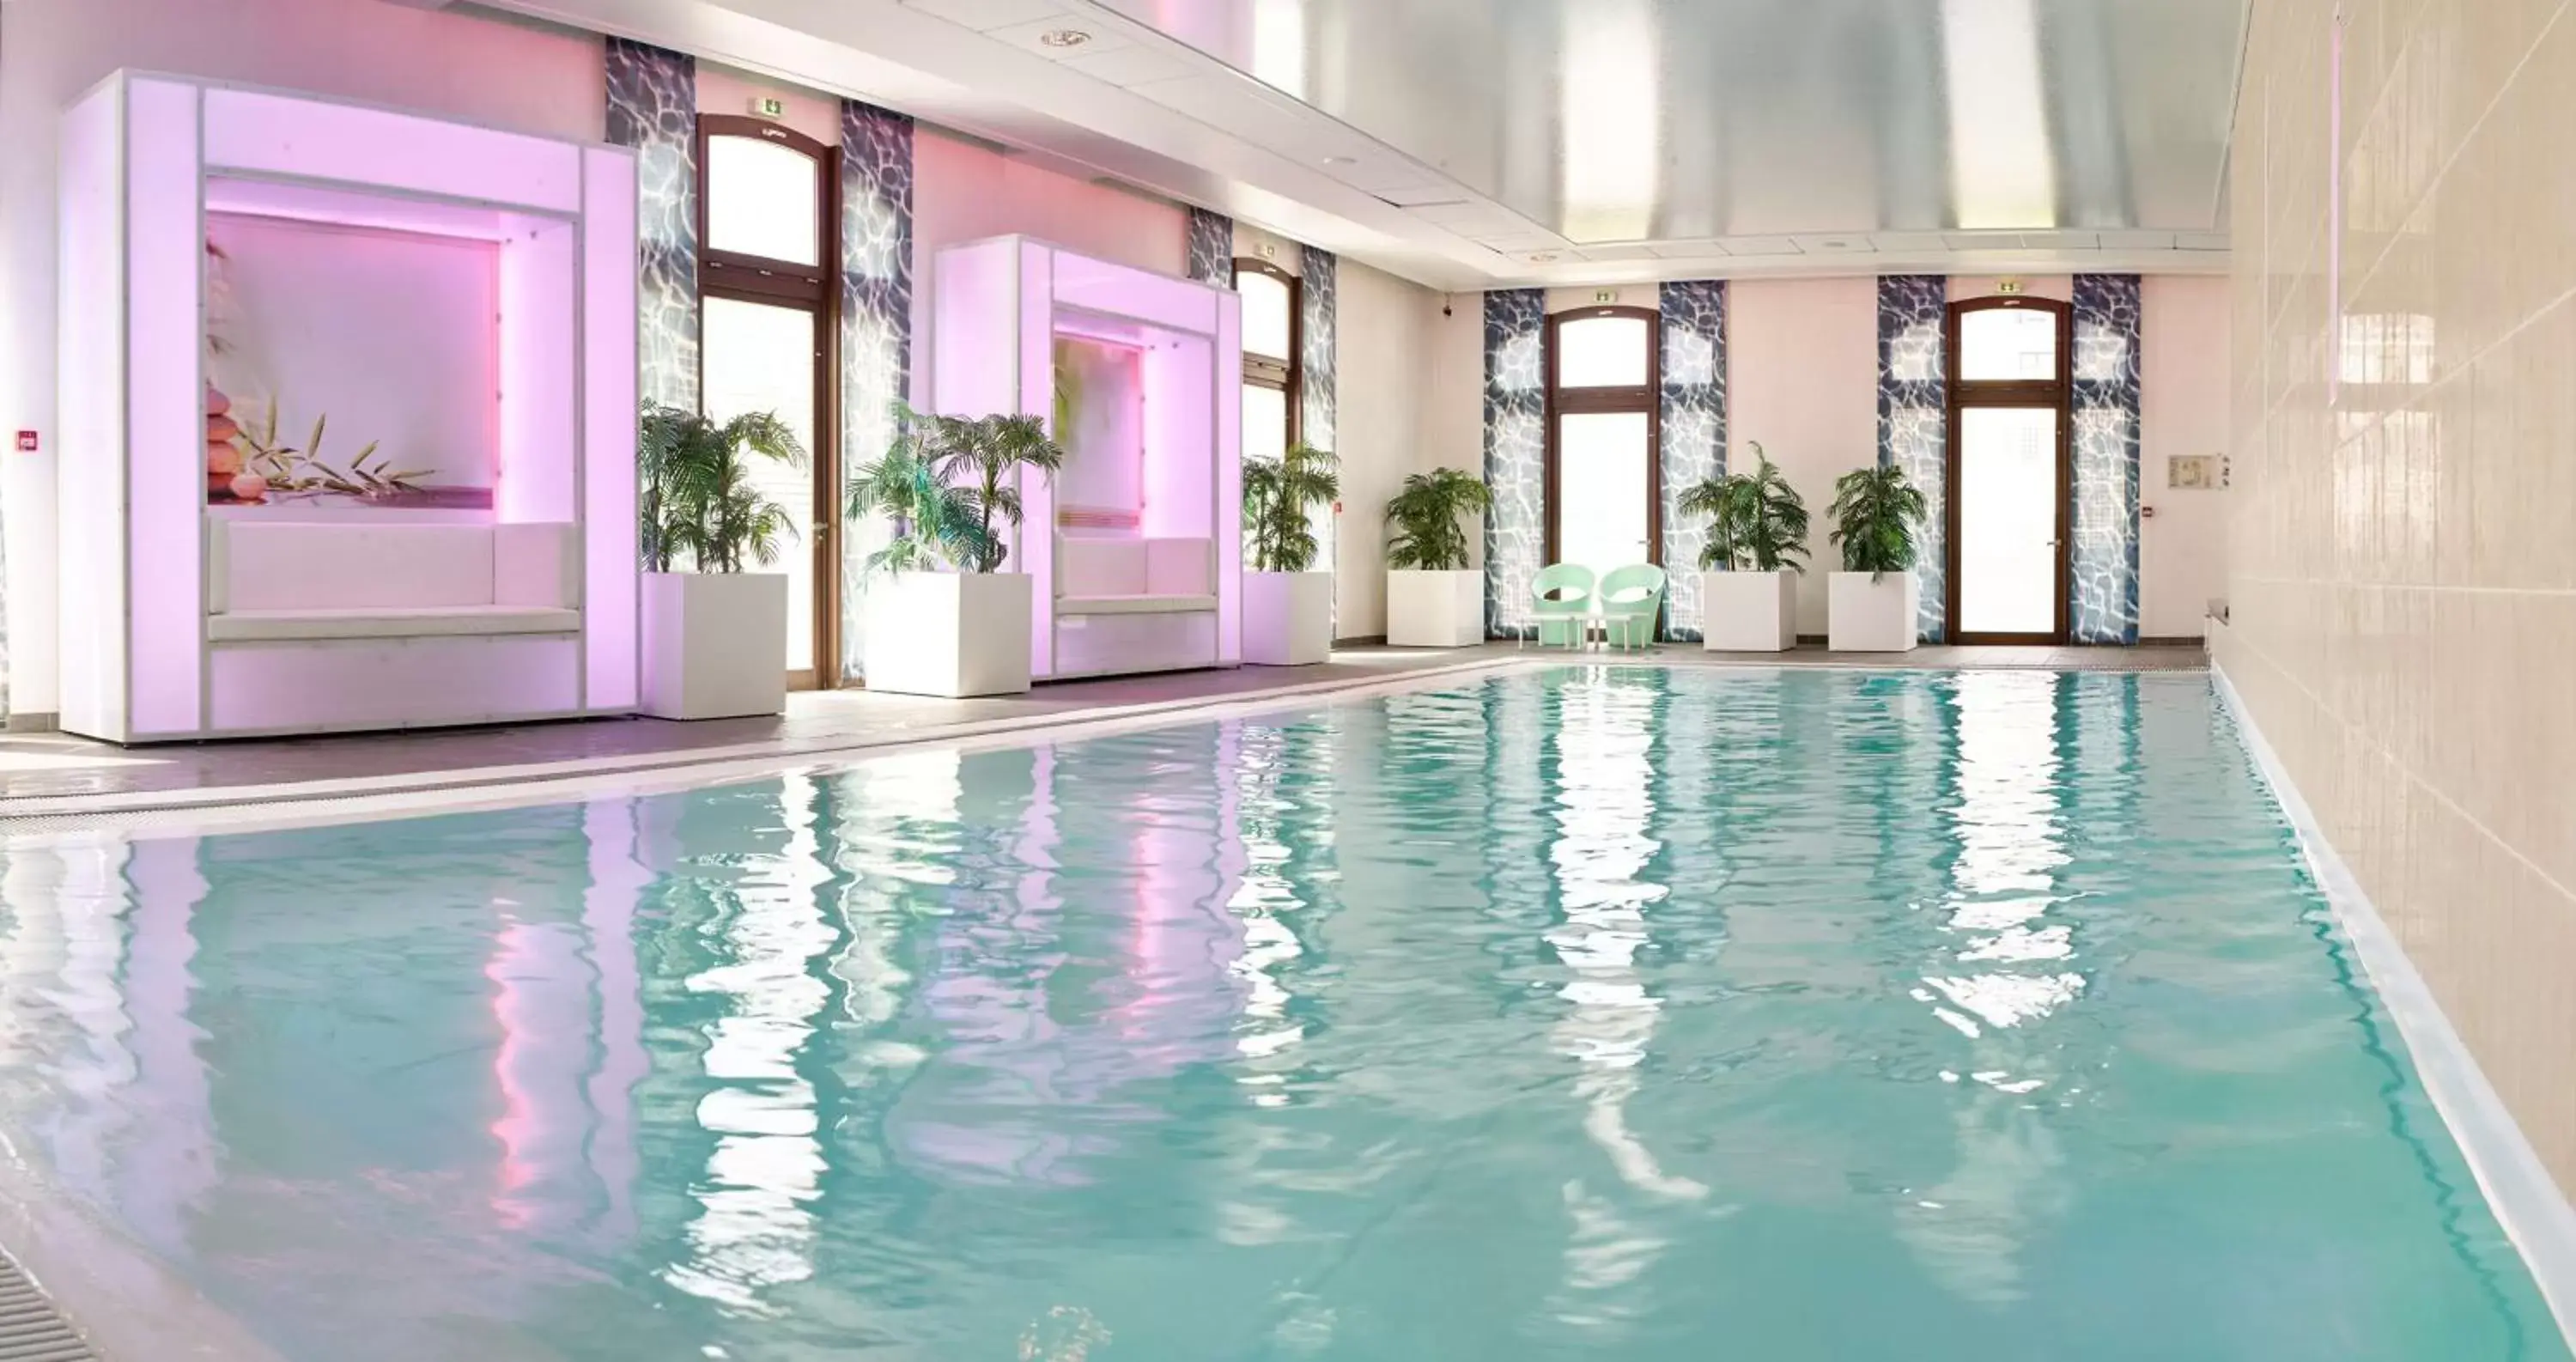 Activities, Swimming Pool in Radisson Blu Hotel Paris, Marne-la-Vallée